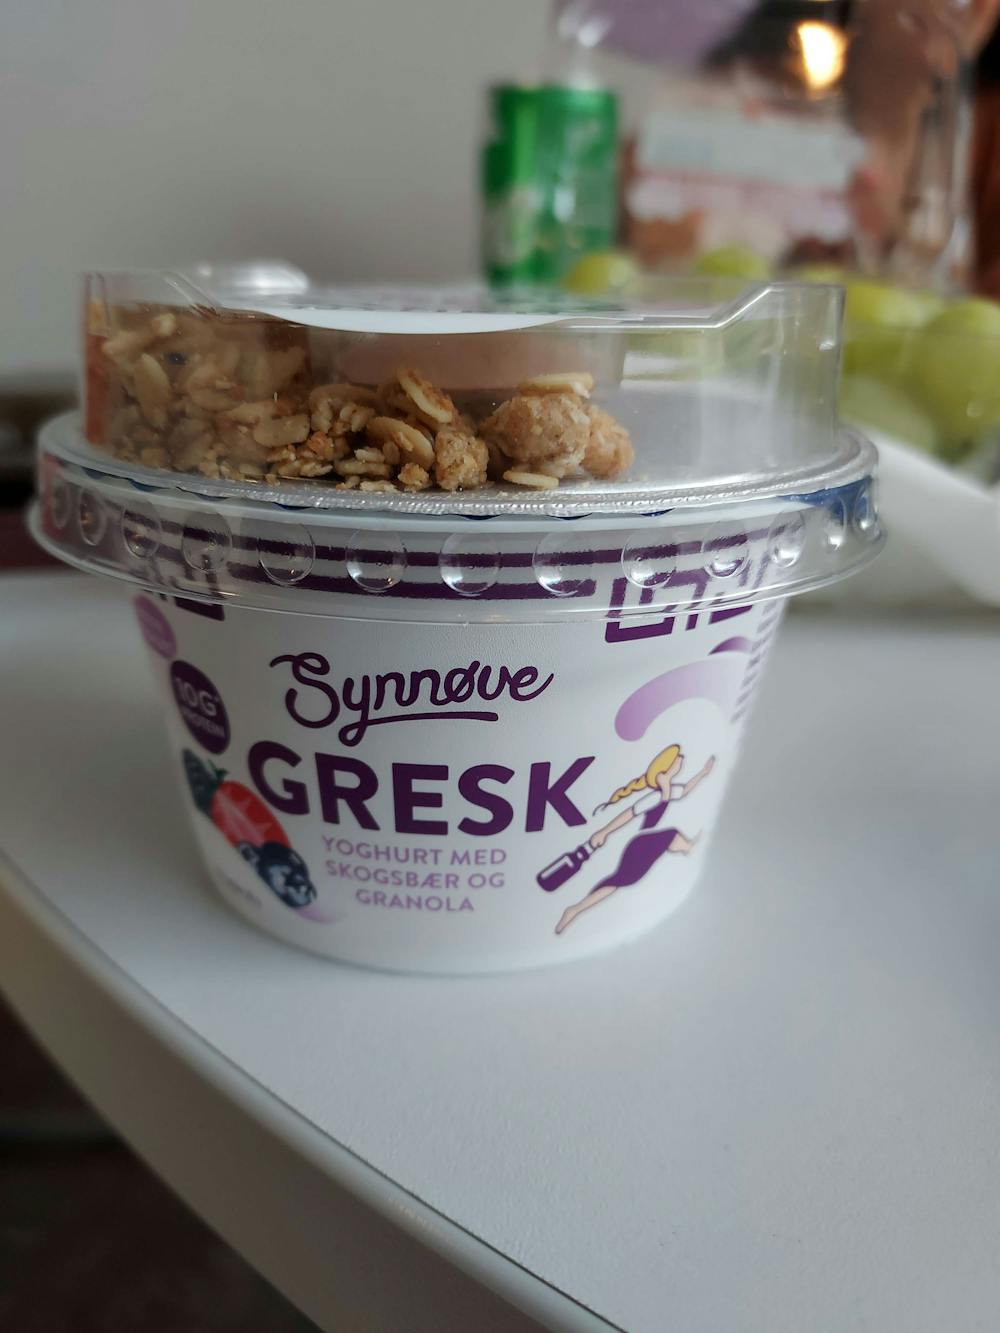 Gresk yoghurt med skogsbær og granola, Synnøve